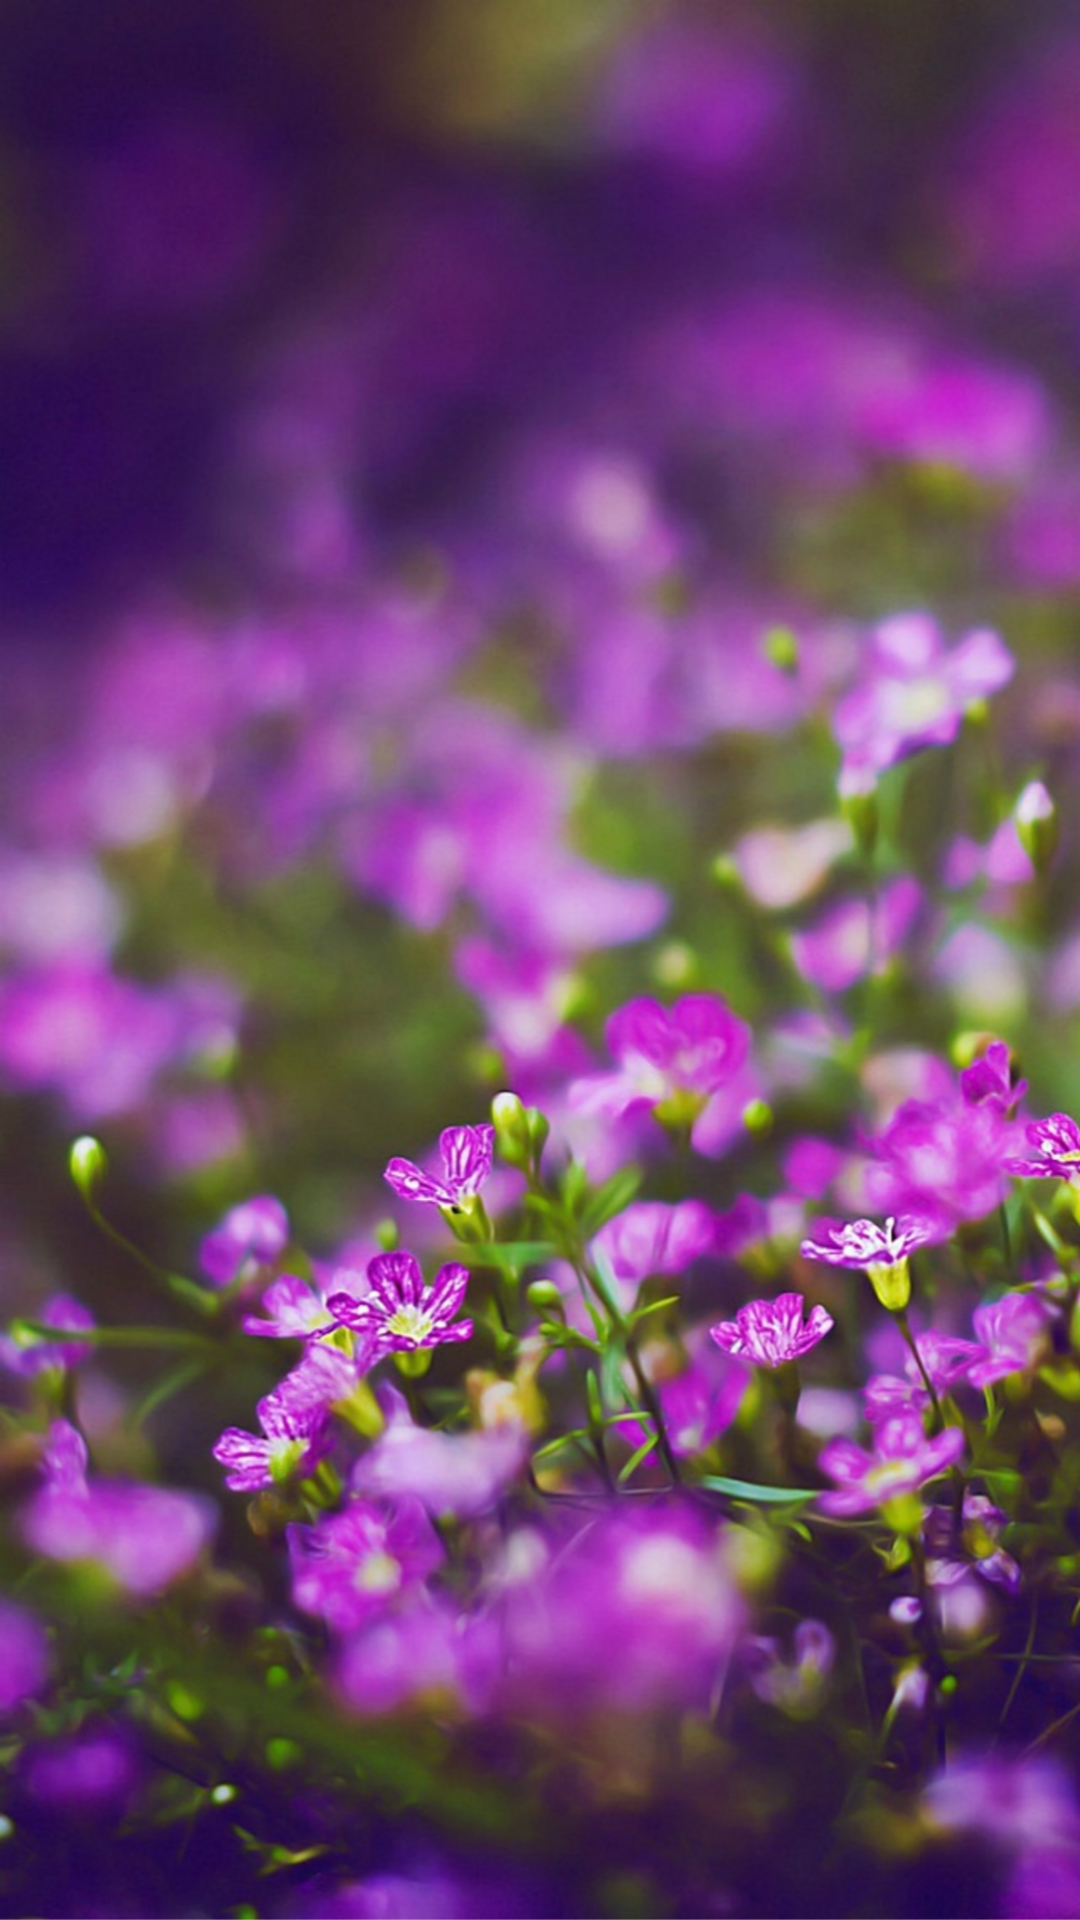 hd flower wallpapers for mobile,violet,flower,purple,nature,lavender